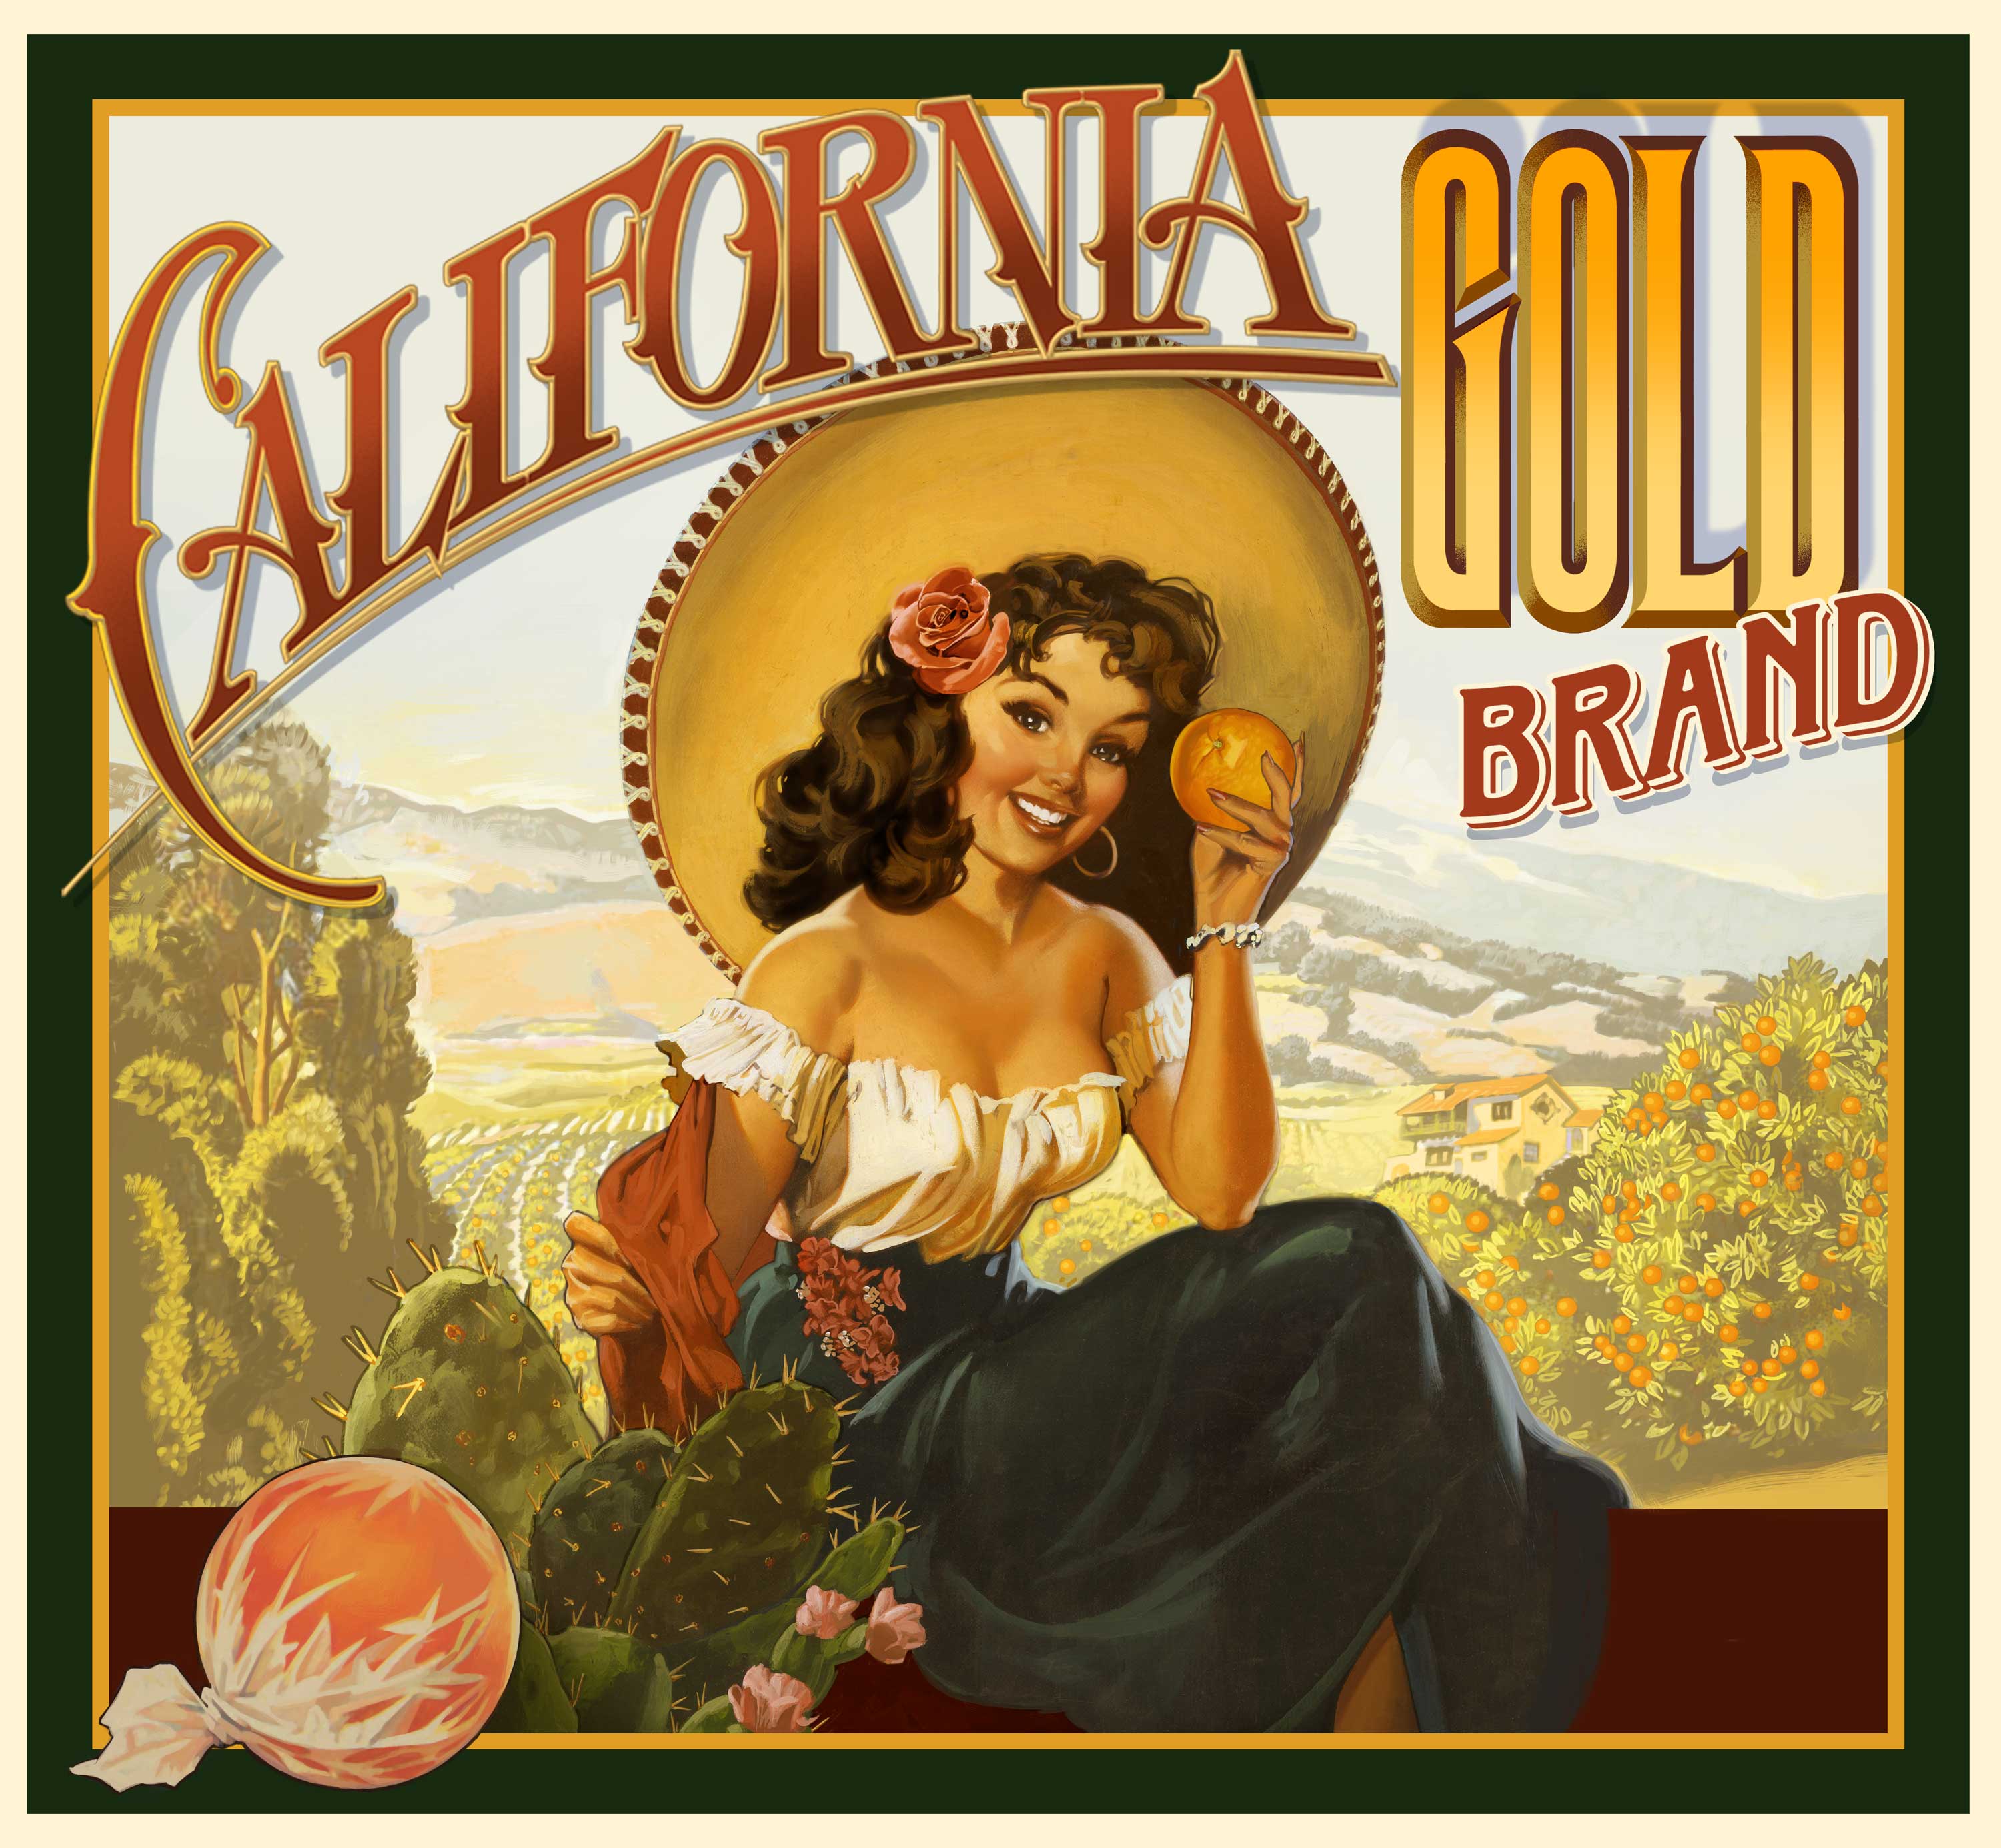 Robert Rodriguez Illustration California gold brand